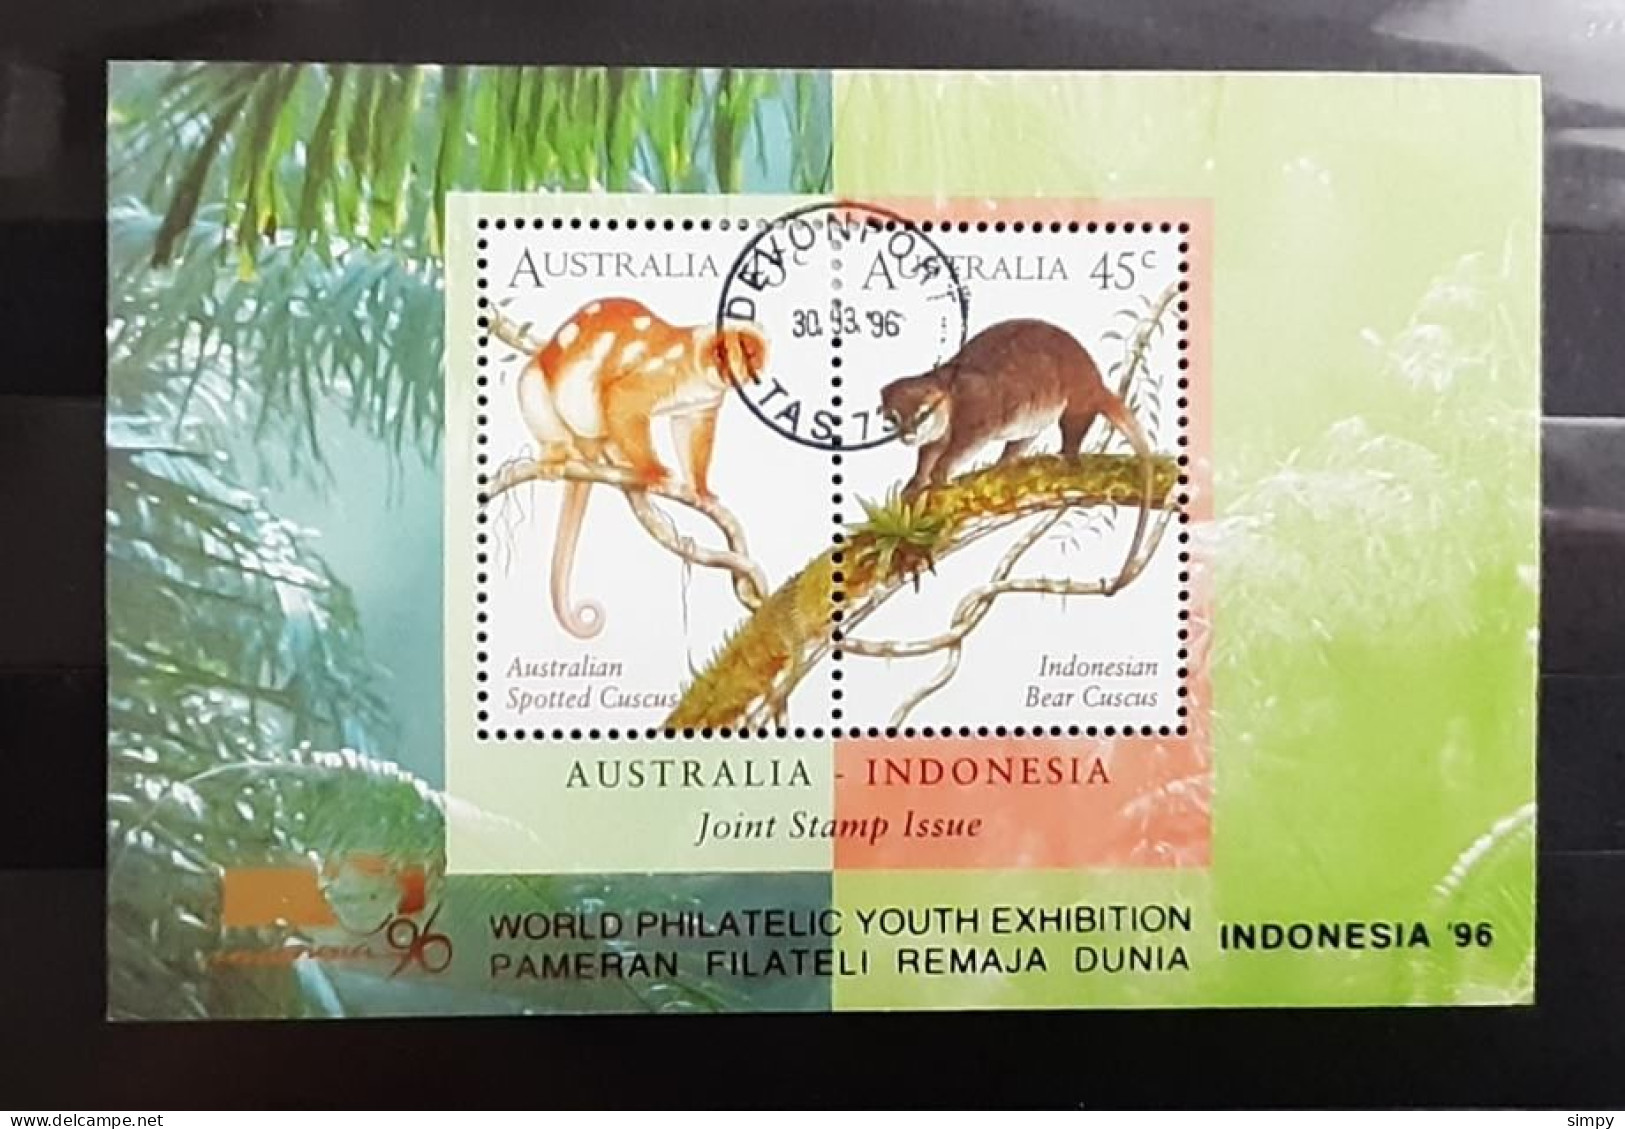 AUSTRALIA 1996 Cuscus Stamp Show Exhibition Indonesia Used Mini Sheet Block - Blocs - Feuillets